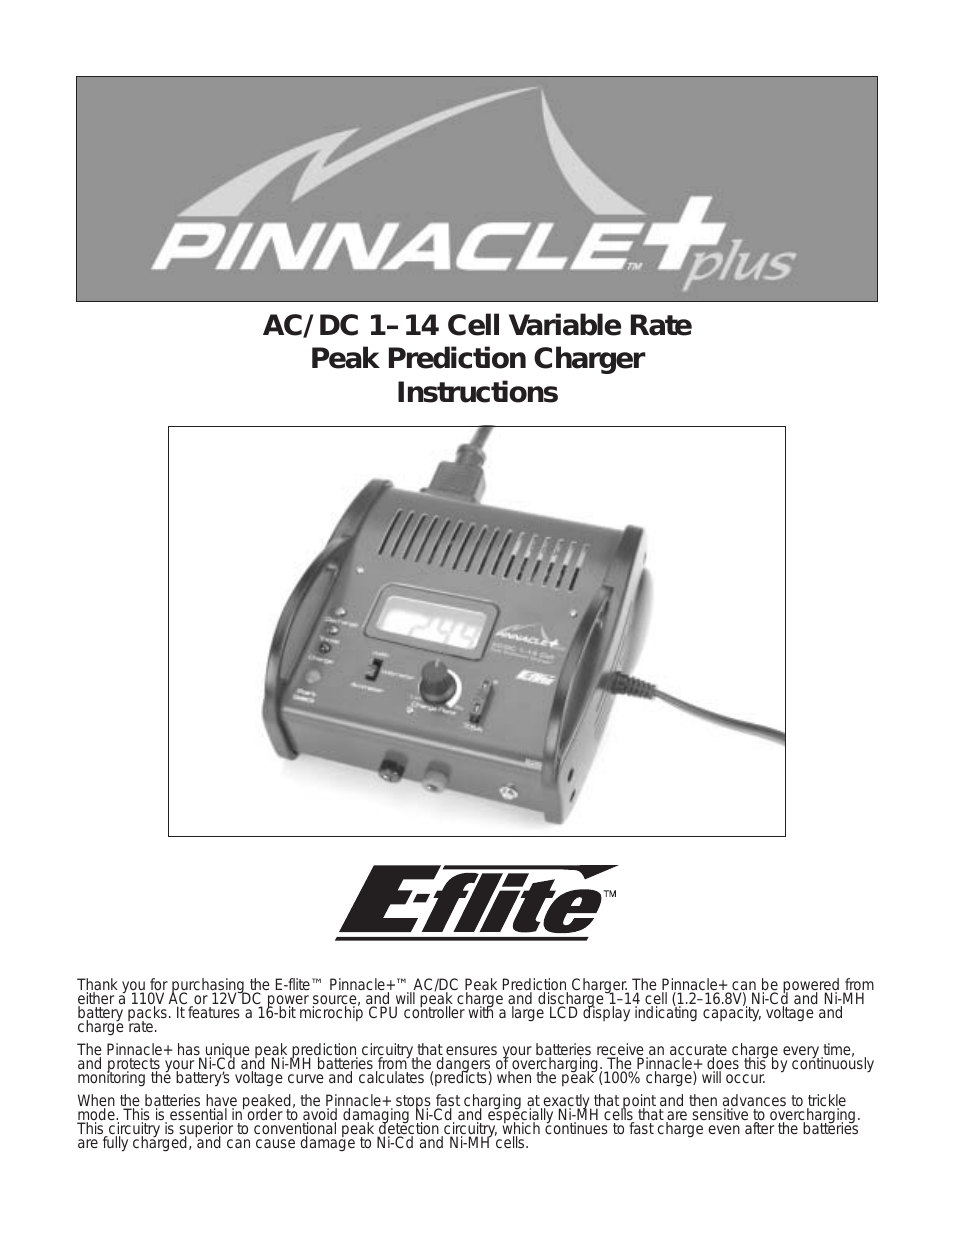 Pinnacle+ AC/DC 1-14C Charger